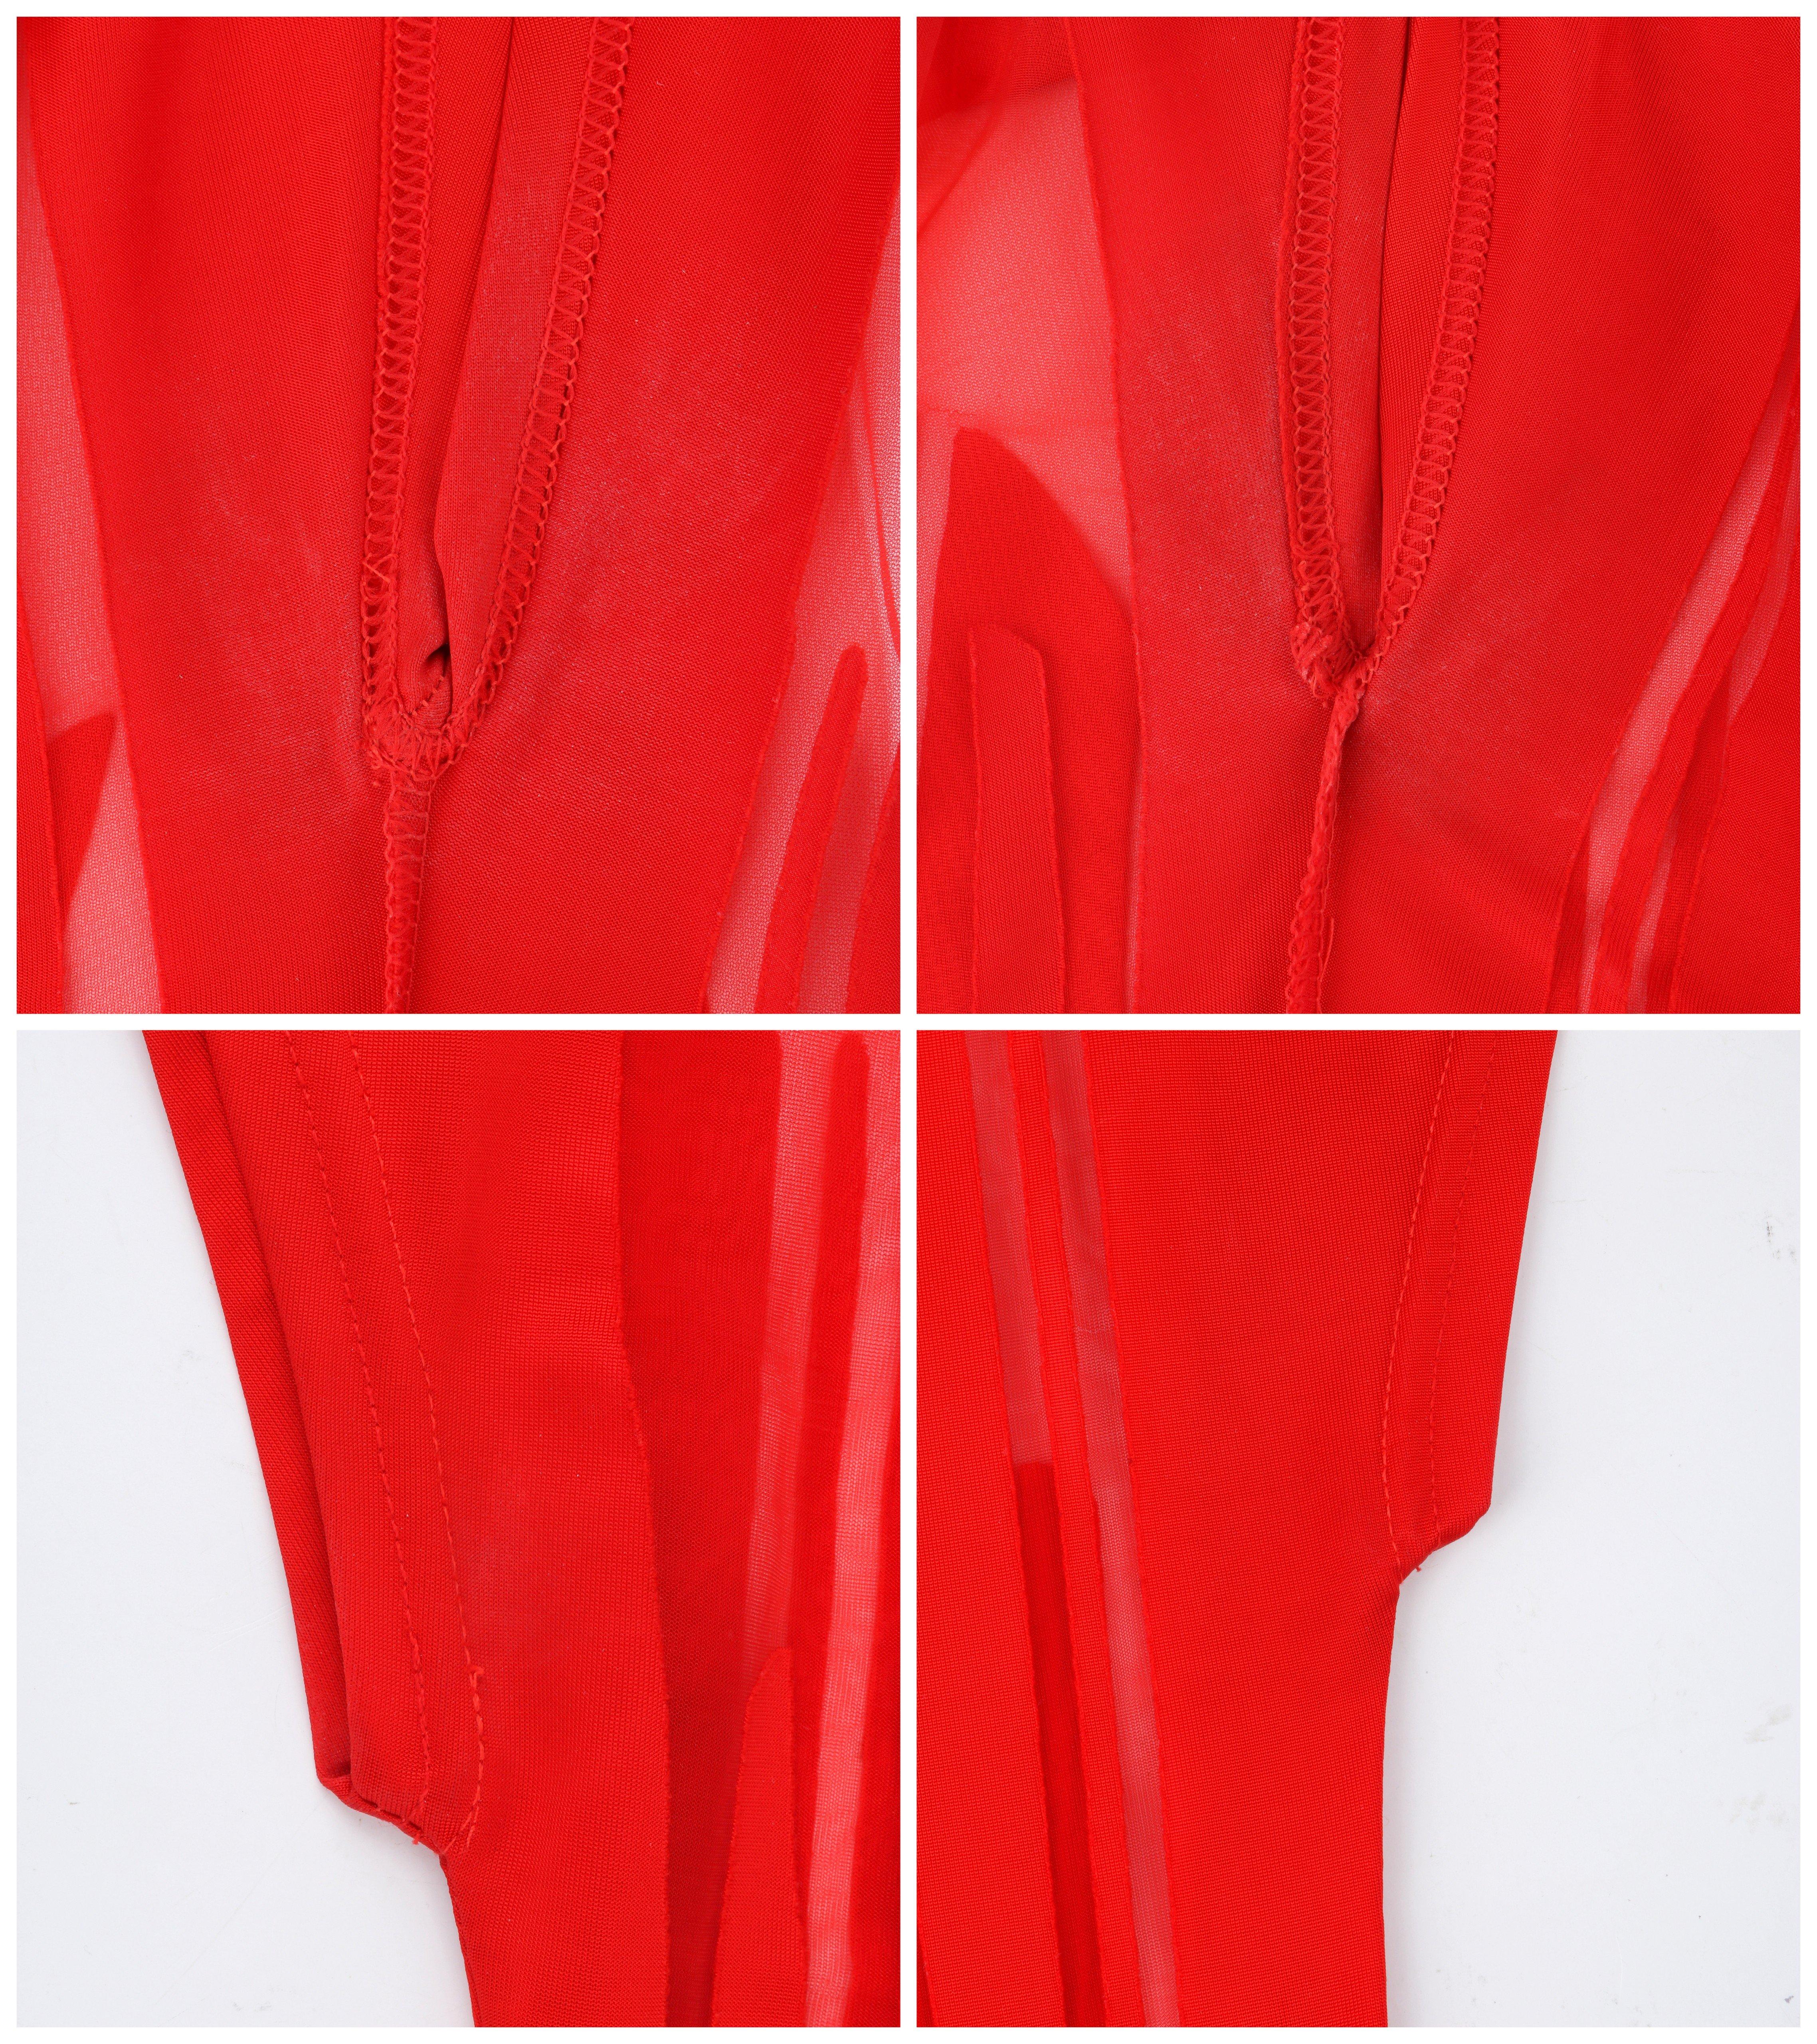 ALEXANDER McQUEEN S/S 1996 Red Semi Sheer Mesh Short Sleeve Shell Top For Sale 6